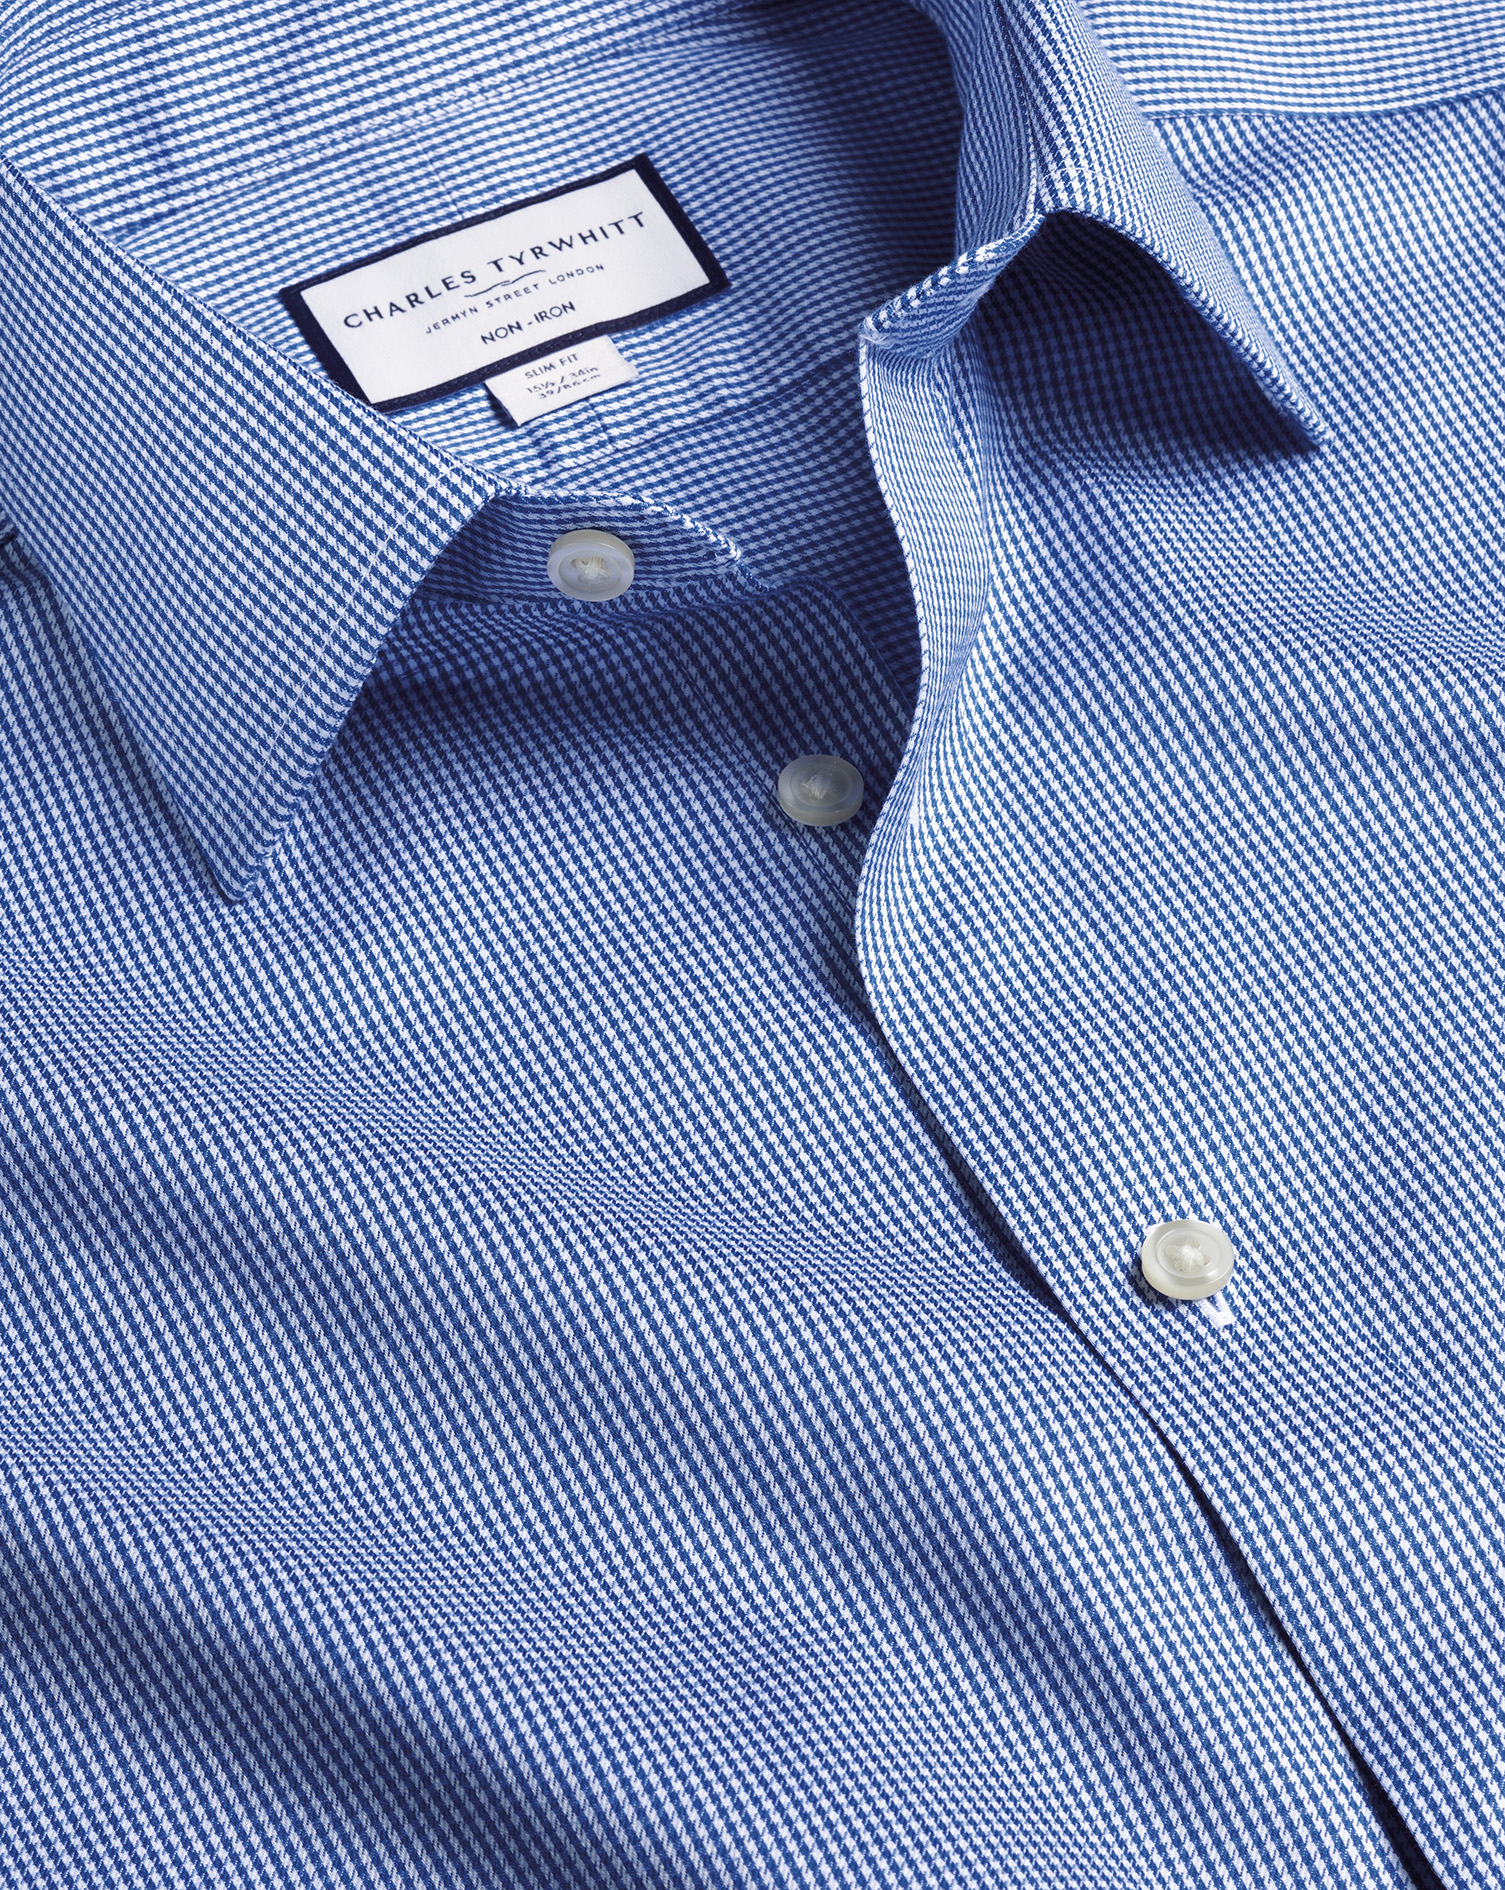 Men's Charles Tyrwhitt Non-Iron Puppytooth Dress Shirt - Royal Blue French Cuff Size Small Cotton
